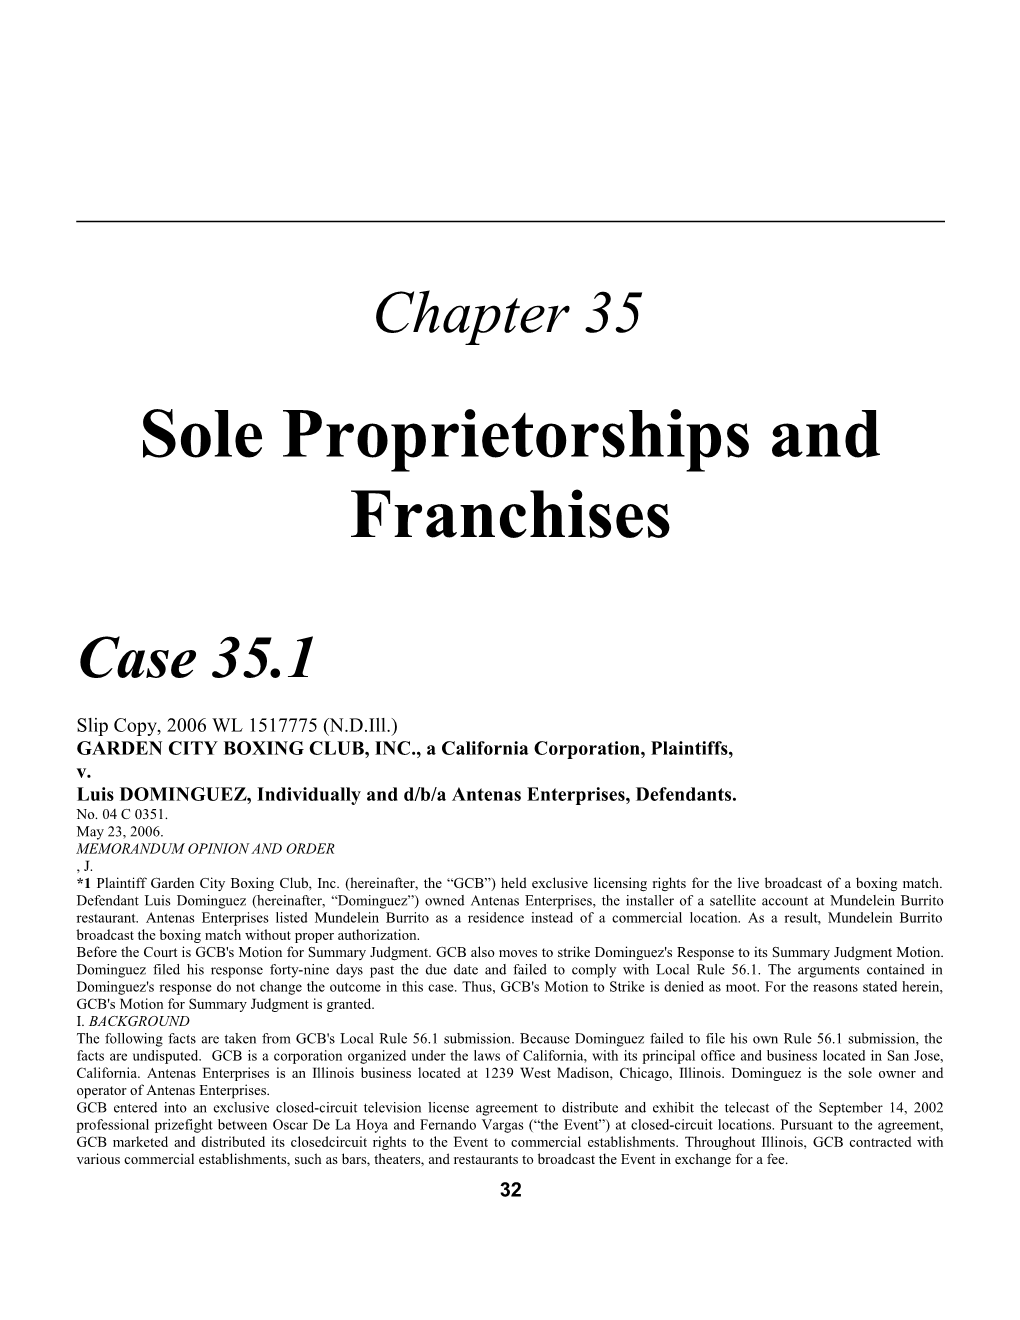 Chapter 35: Sole Proprietorships and Franchises 557